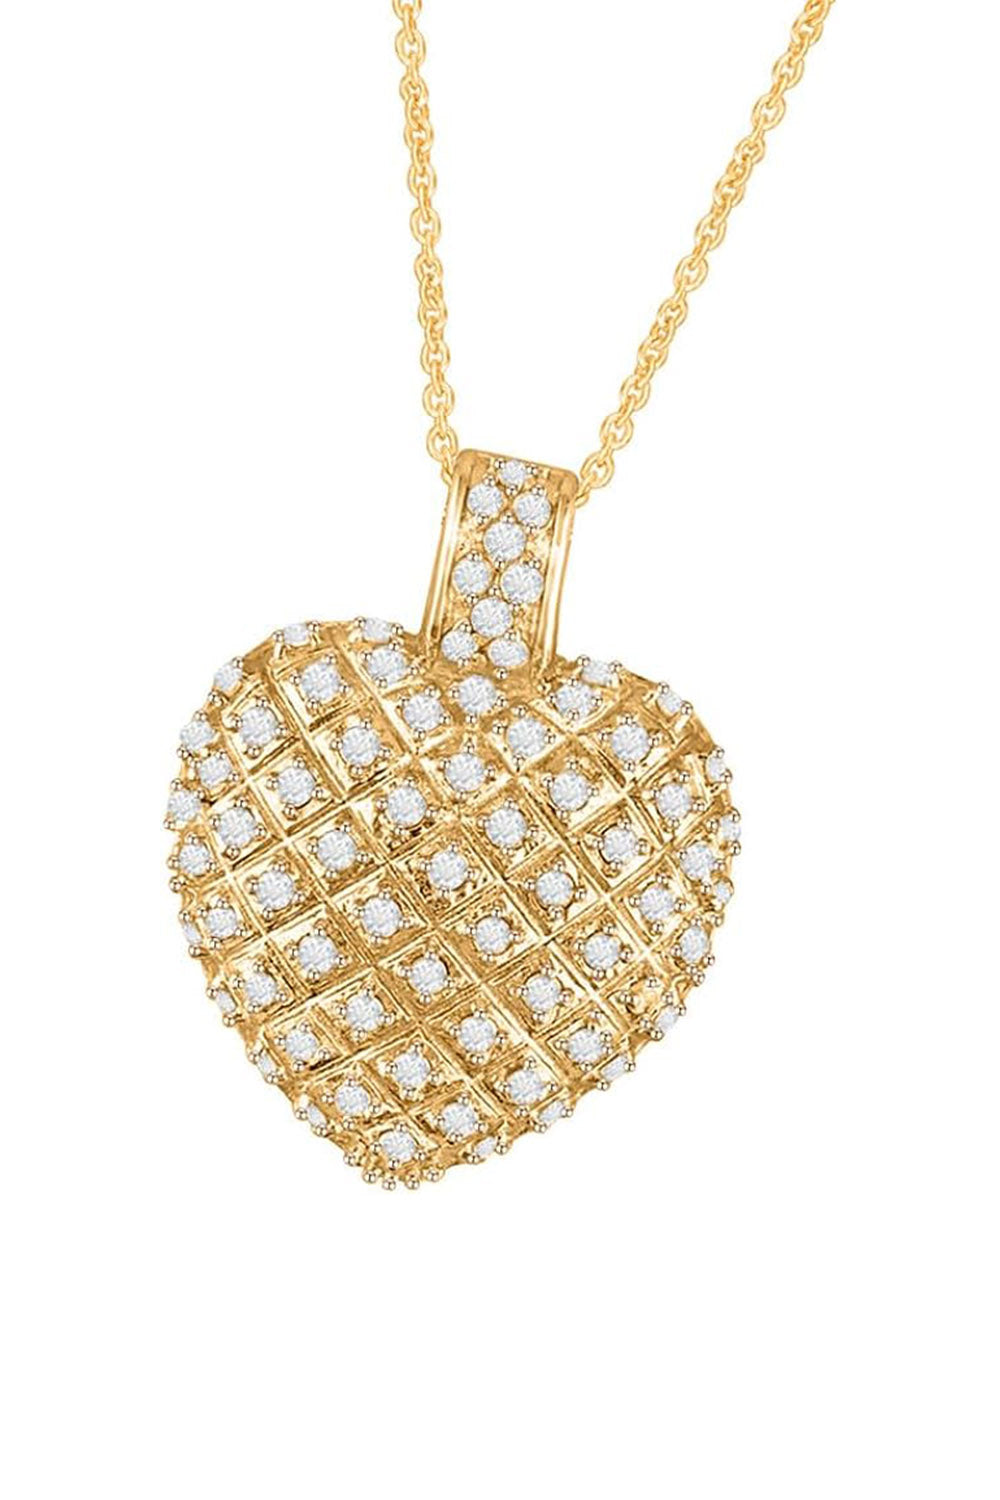 Yellow Gold Color Love Heart Shape Pendant Necklace